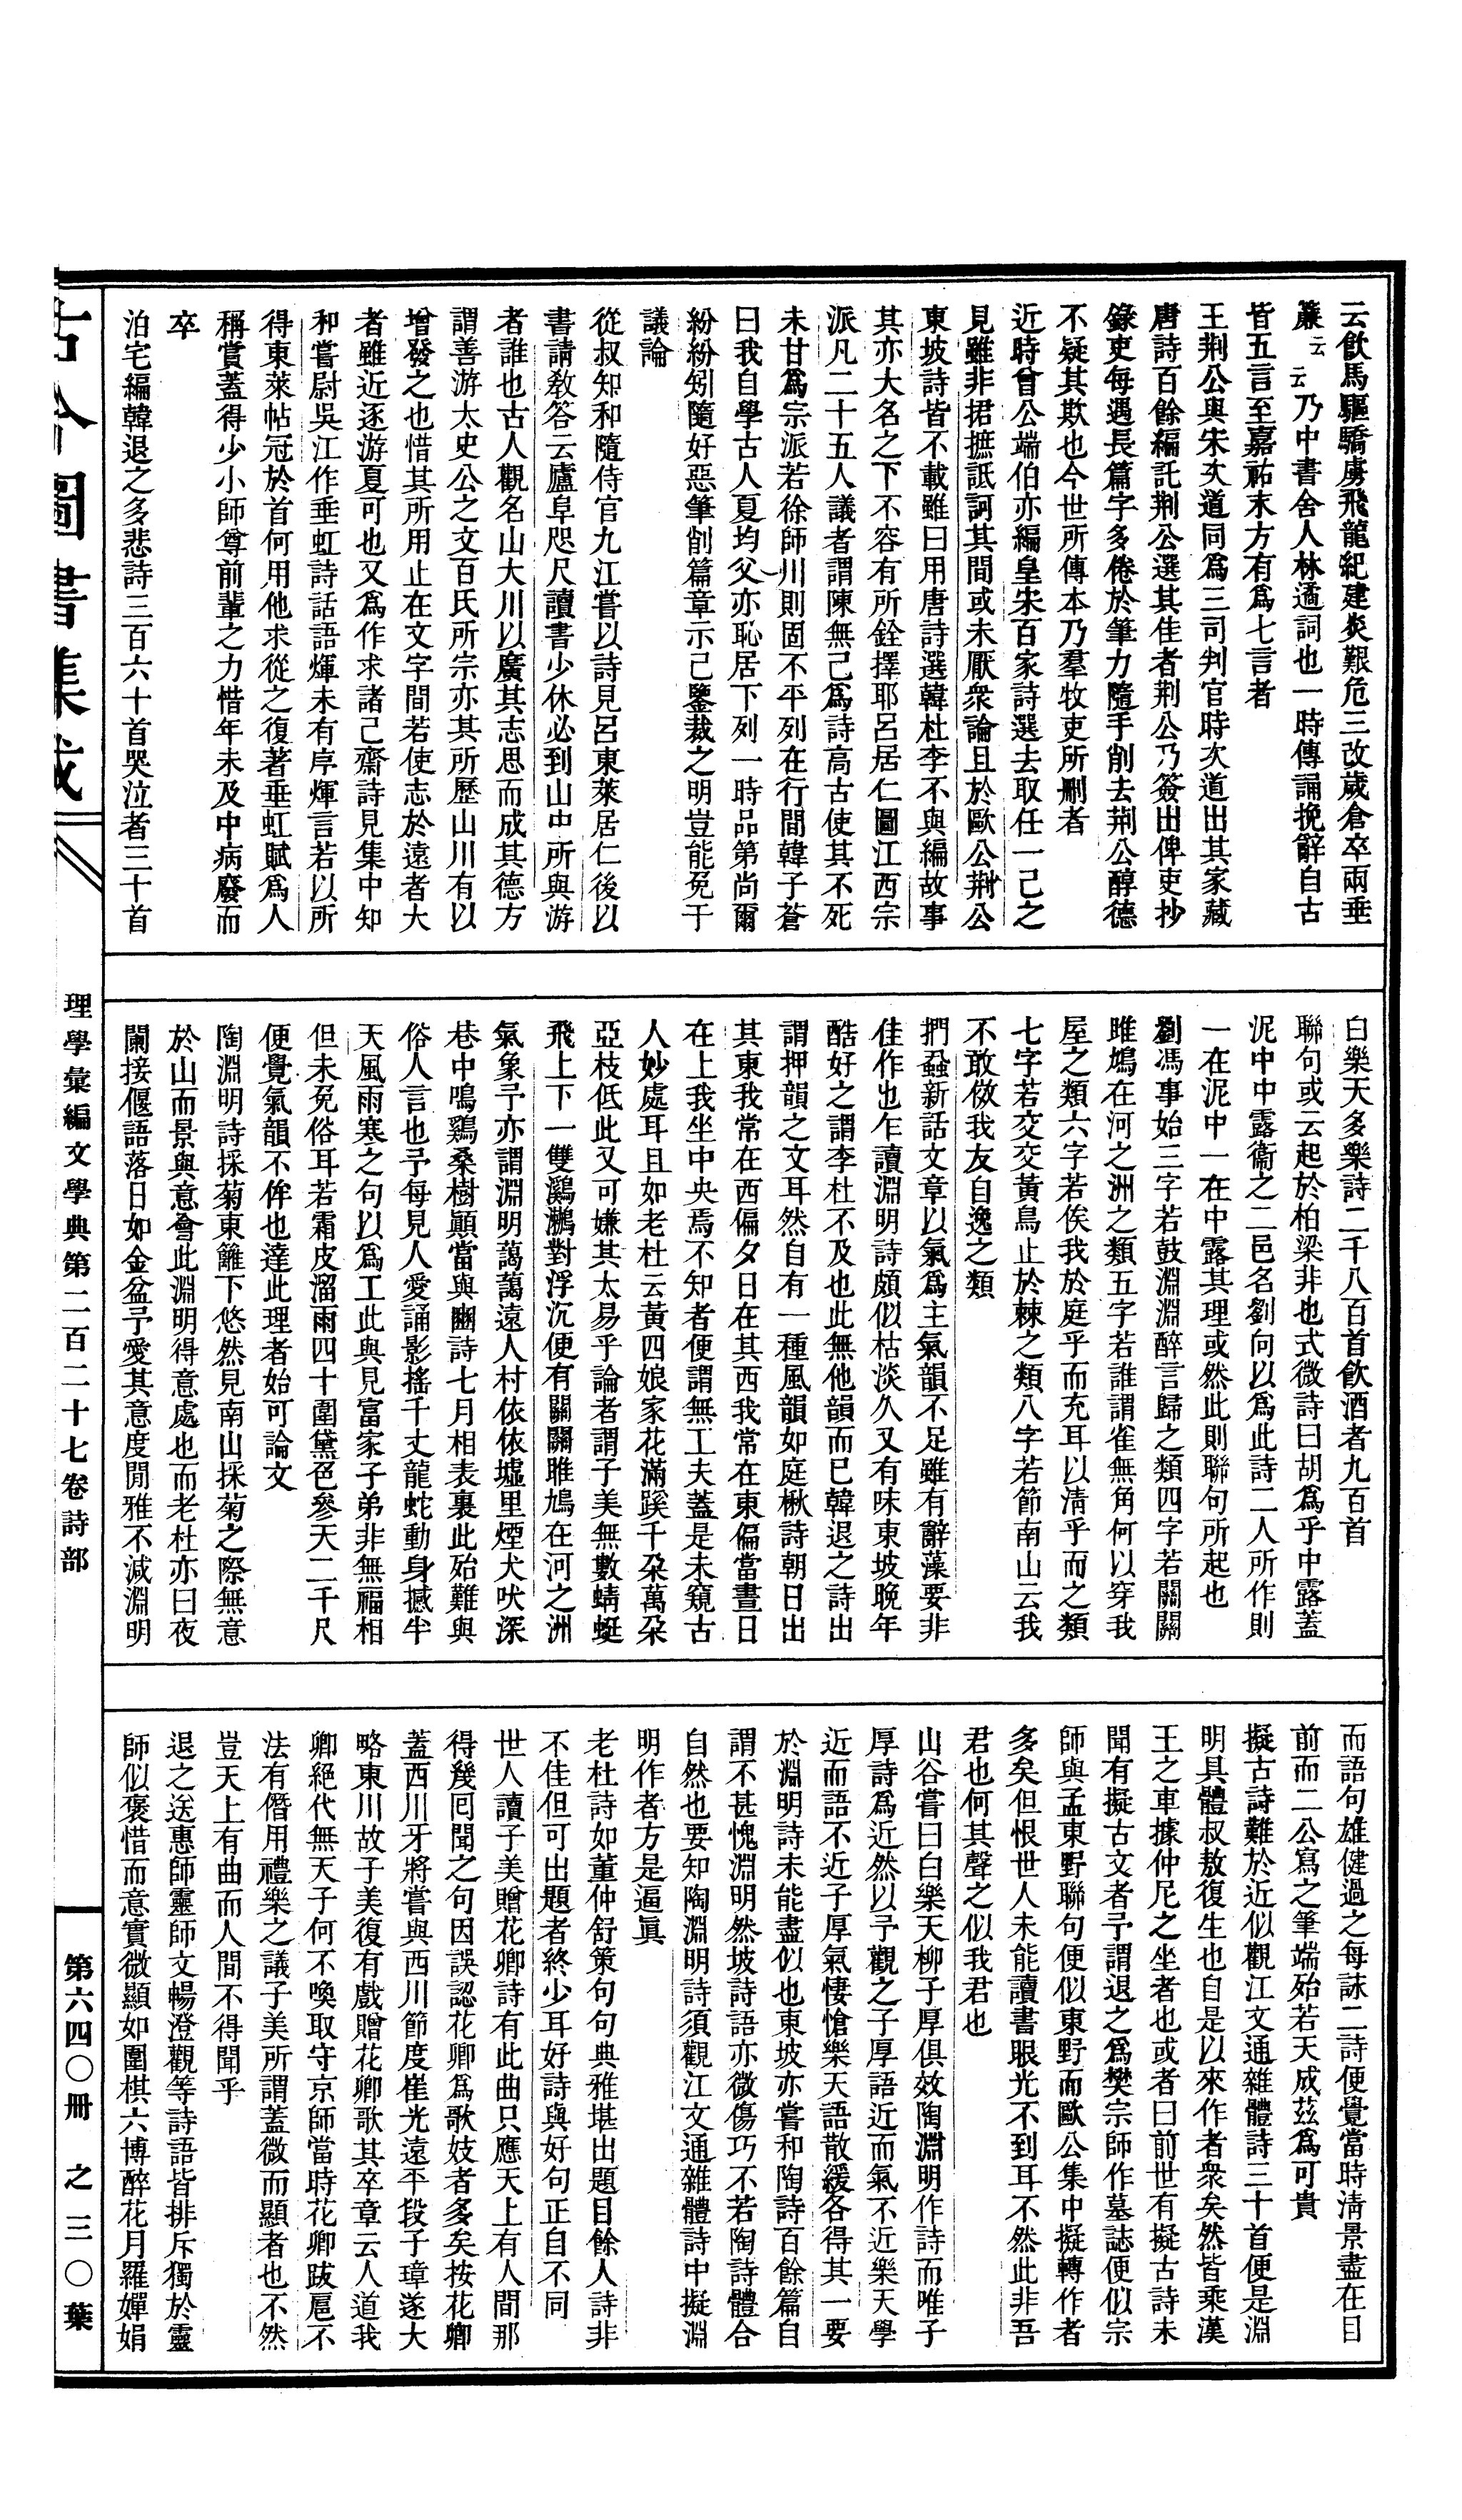 Page Gujin Tushu Jicheng Volume 640 1700 1725 Djvu 60 维基文库 自由的图书馆